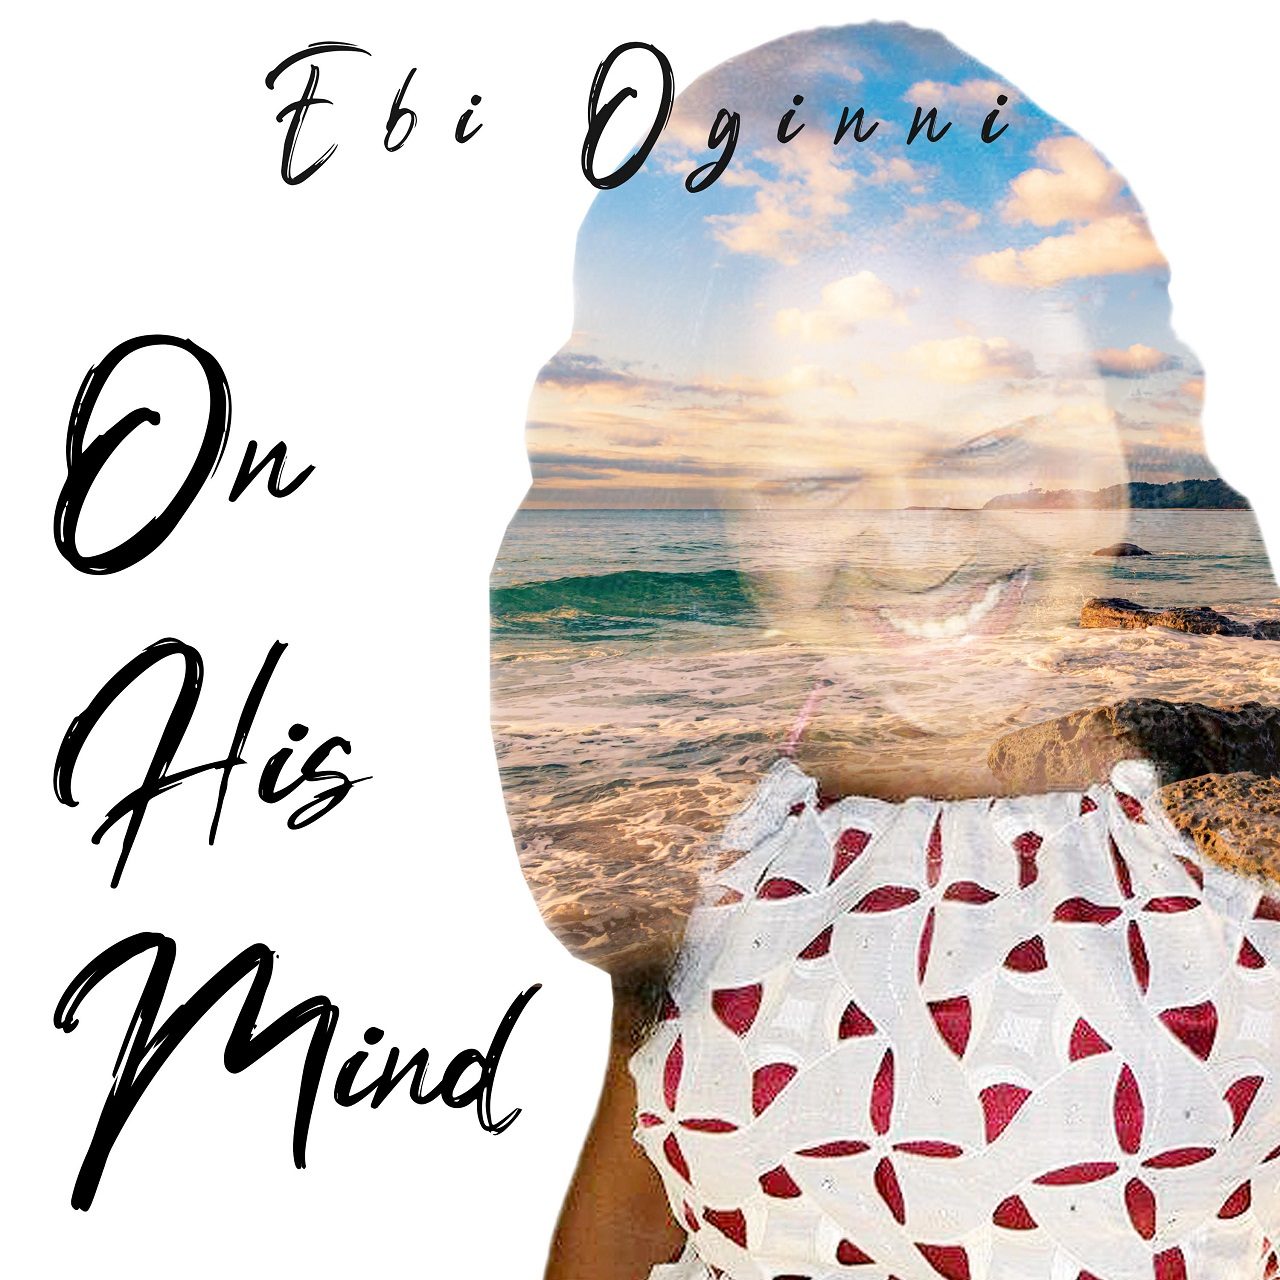 Ebi Oginni - On His Mind